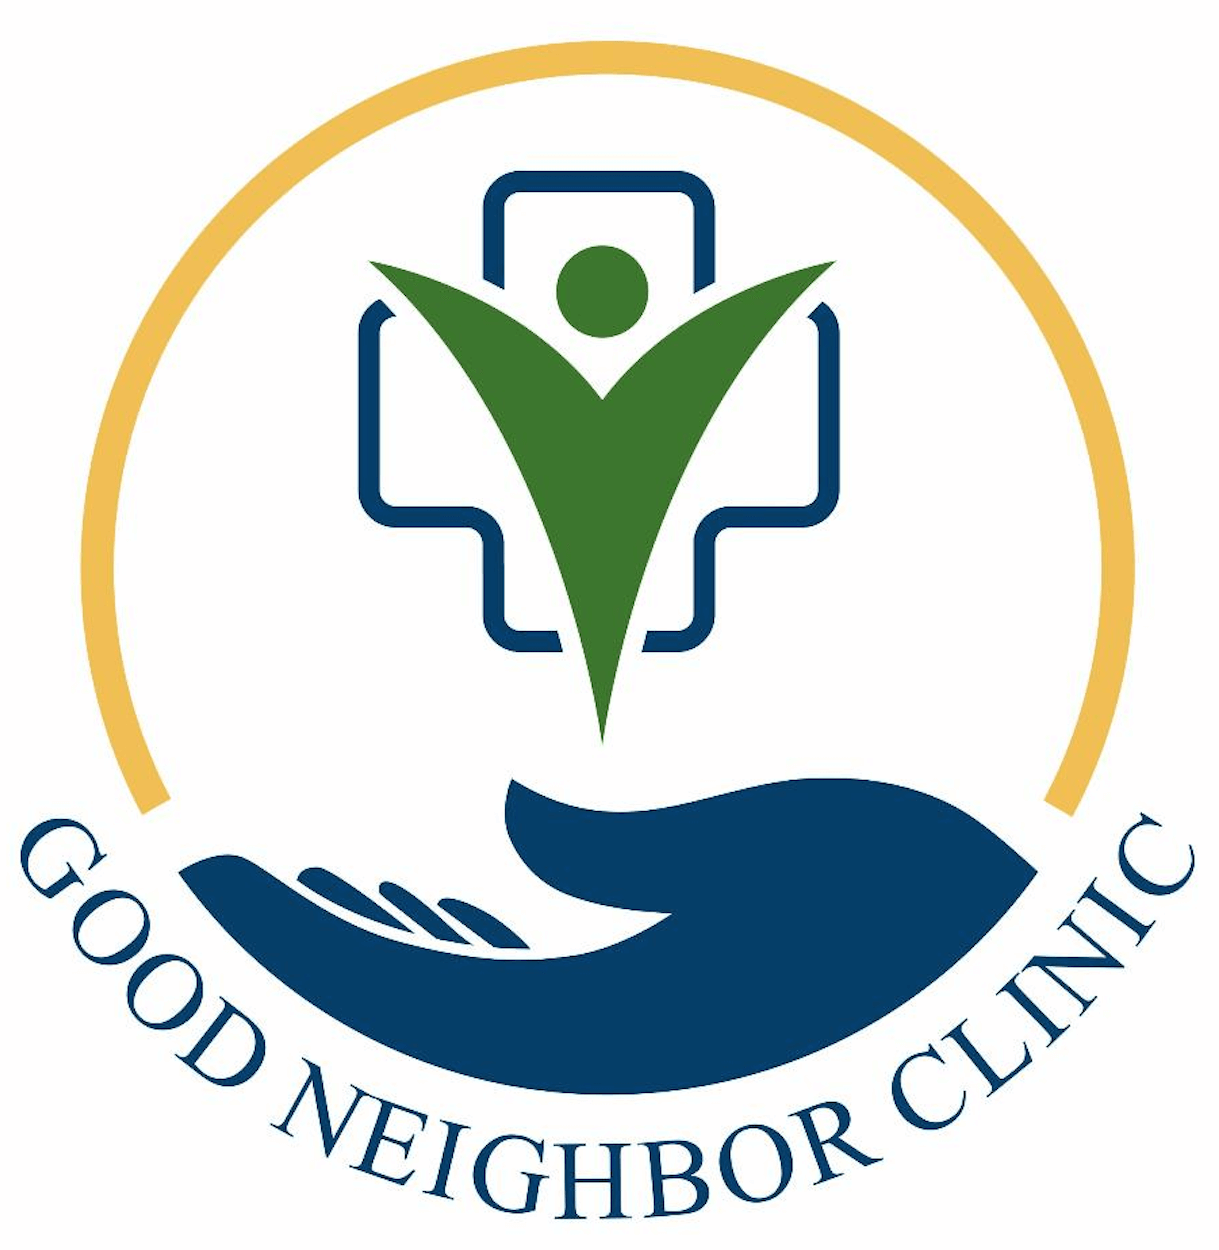 A good neighbor clinic logo with a hand and cross.